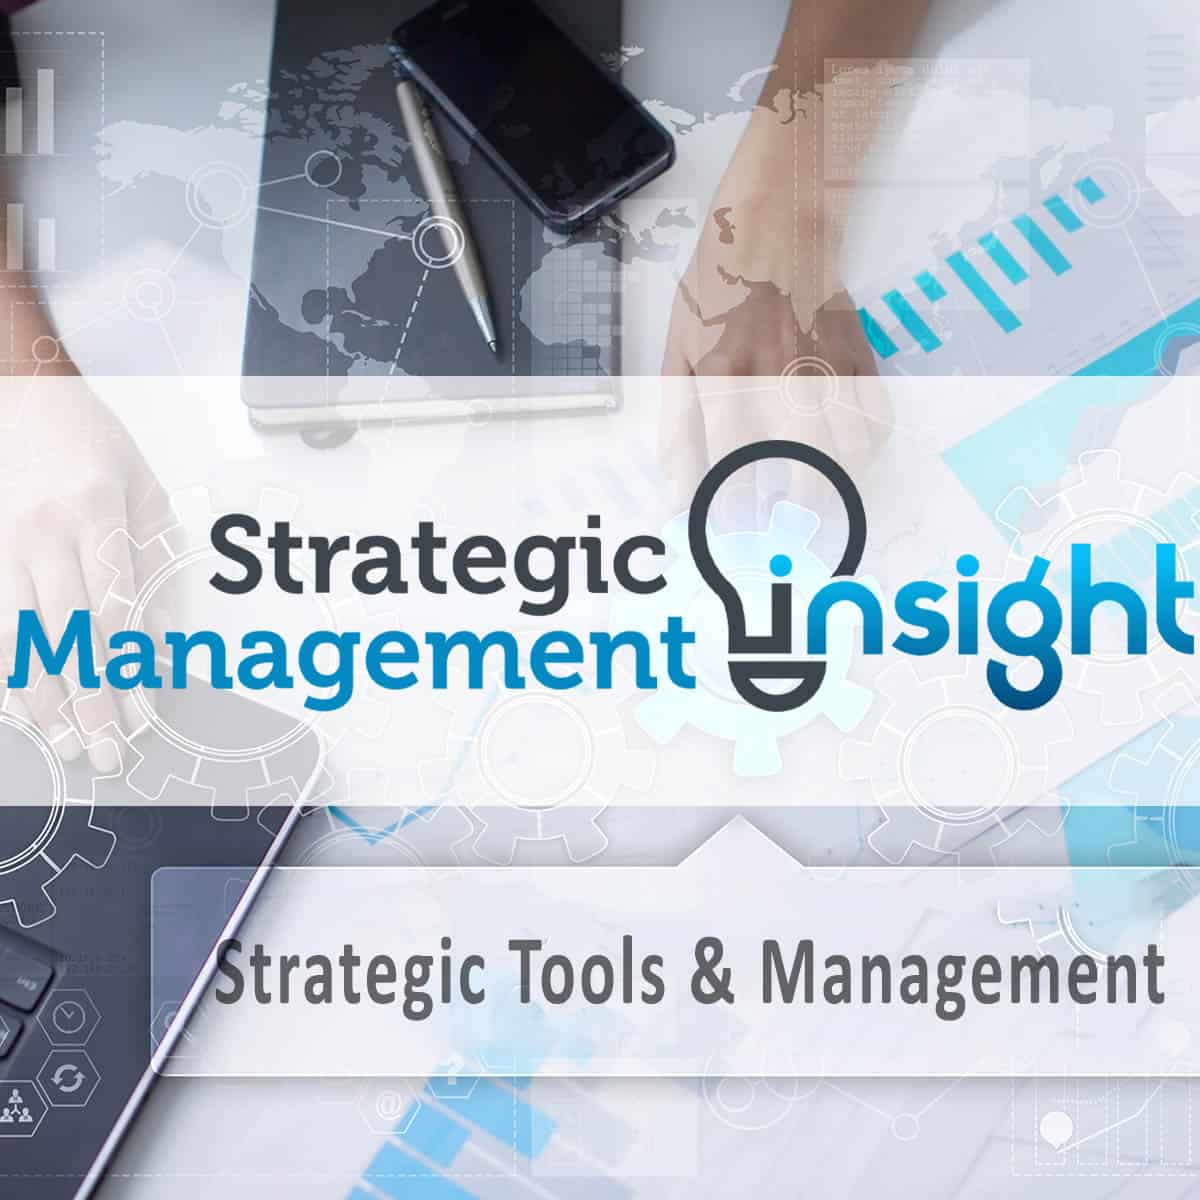 (c) Strategicmanagementinsight.com